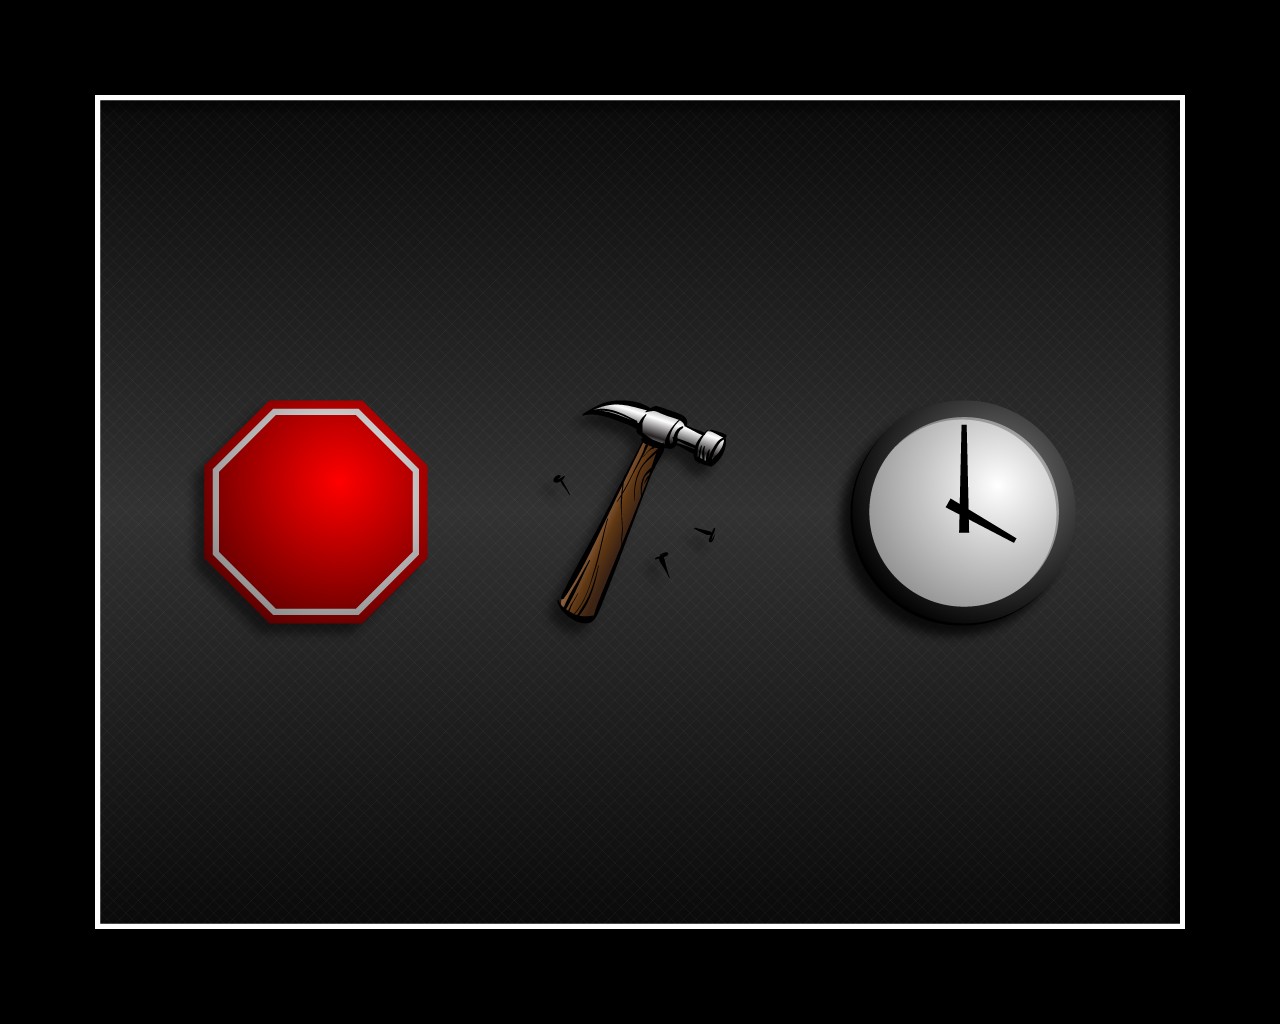 Hammer Stop Sign Clocks Time Minimalism Songs Music Humor Imagination Nails 1280x1024